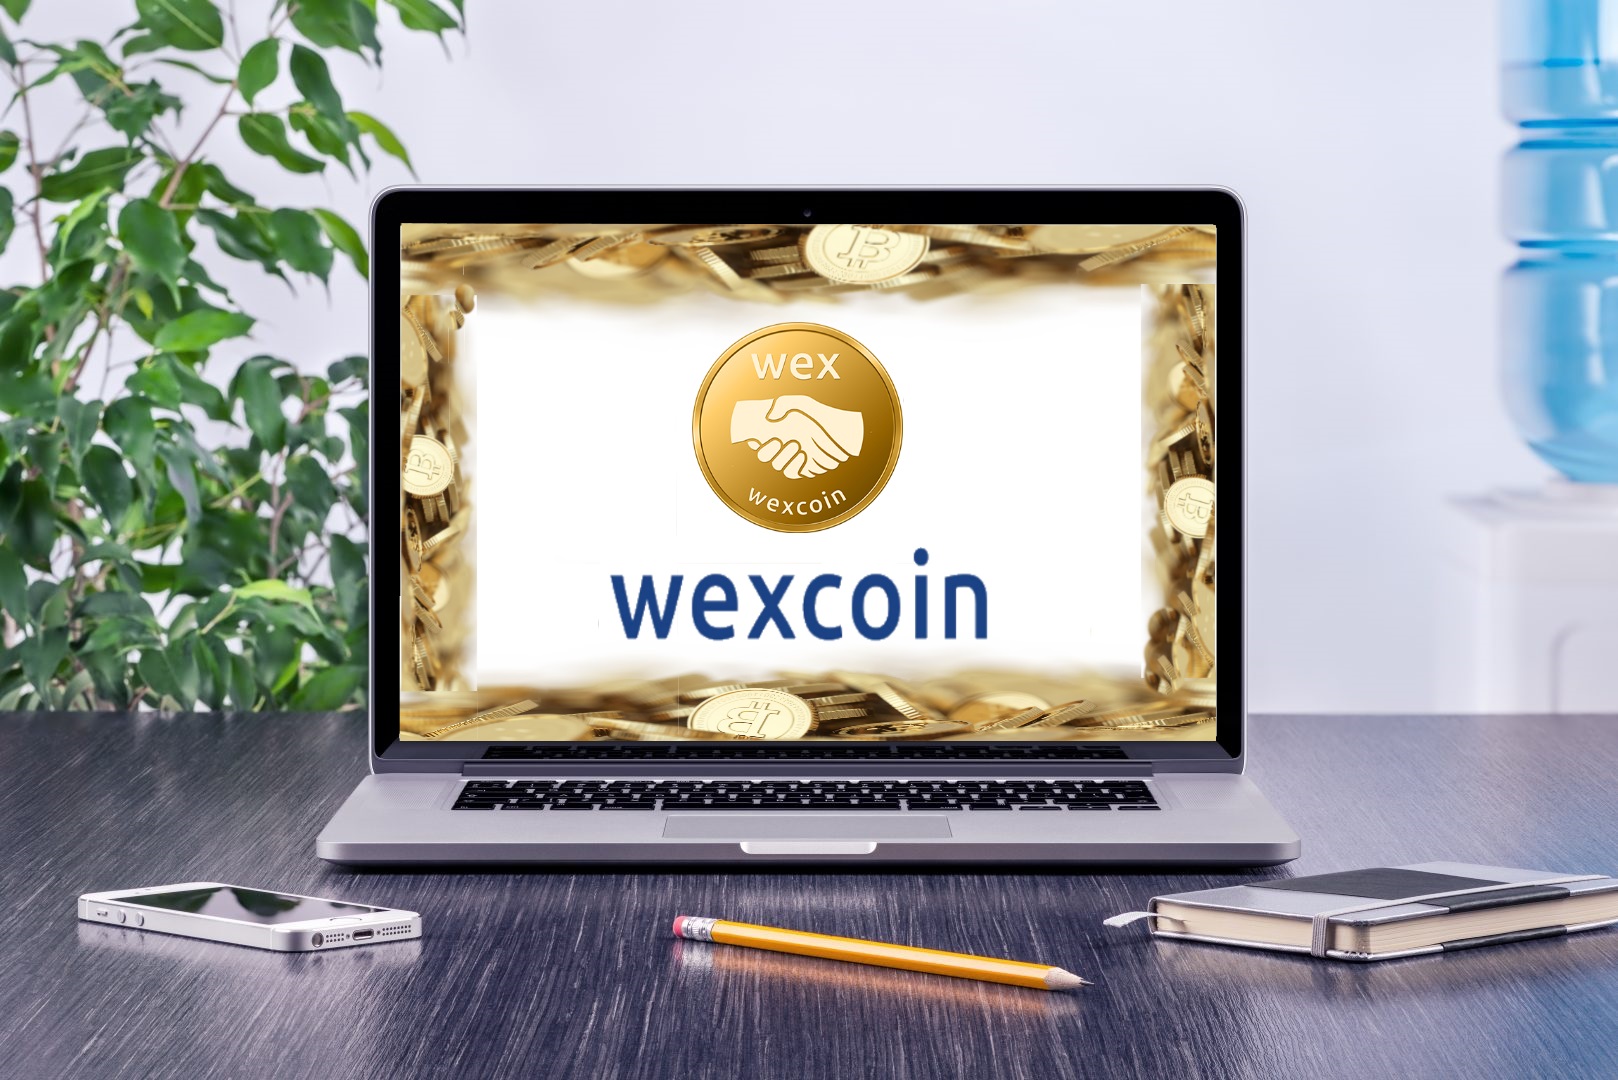 wex coin